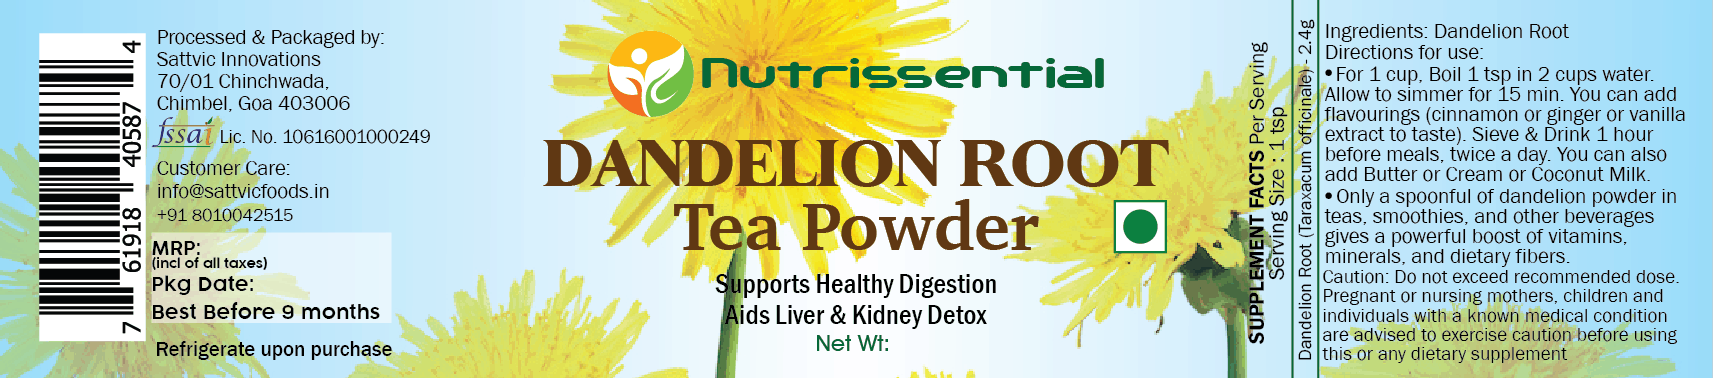 Dandelion Root Tea Powder - Label